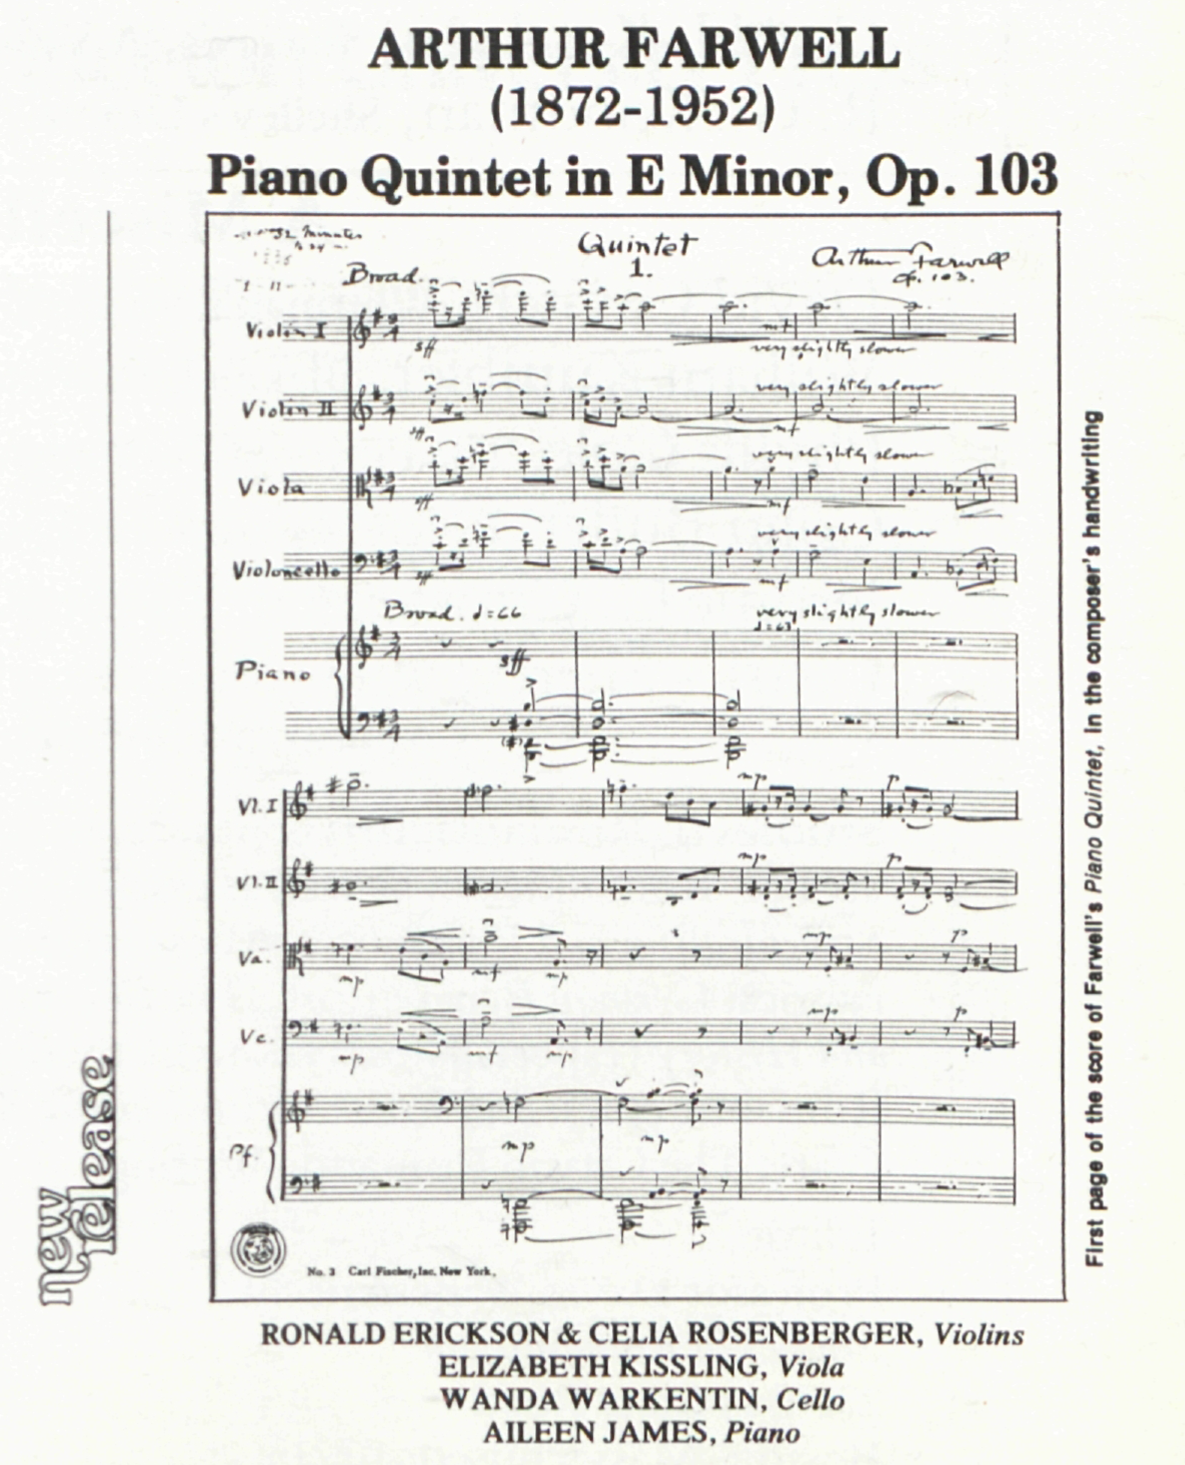 ARTHUR FARWELL
                    	(1872-1952)
                    	Piano Quintet in E Minor, Op. 103
                    	
                    	new release
                    	
                    	
                    	32 minutes
                    	to 34
                    	
                    	Quintet
                    	1.
                    	
                    	Arthur Farwell
                    	Op. 103.
                    	
                    	Broad.
                    	
                    	Violin I
                    	3
                    	4
                    	sff
                    	
                    	mf
                    	very slightly slower
                    	
                    	Violin II
                    	3
                    	4
                    	sff
                    	
                    	very slightly slower
                    	mf
                    	
                    	Viola
                    	3
                    	4
                    	sff
                    	
                    	very slightly slower
                    	mf
                    	
                    	Violoncello
                    	3
                    	4
                    	sff
                    	
                    	very slightly slower
                    	mf
                    	
                    	Broad. ♩ = 66
                    	
                    	Piano {
                    	
                    	3
                    	4
                    	sff
                    	
                    	very slightly slower
                    	♩ = 63
                    	
                    	3
                    	4
                    	
                    	
                    	Vl. I
                    	
                    	mp
                    	
                    	p
                    	
                    	Vl. II
                    	
                    	mp
                    	
                    	p
                    	
                    	Va.
                    	
                    	mp
                    	
                    	mf
                    	
                    	mp
                    	
                    	mp
                    	
                    	p
                    	
                    	Vc.
                    	
                    	mp
                    	
                    	mf
                    	
                    	mp
                    	
                    	mp
                    	
                    	p
                    	
                    	Pf.
                    	
                    	mp
                    	
                    	mp
                    	
                    	
                    	No. 3   Carl Fischer, Inc. New York.
                    	
                    	First page of the score of Farwell’s Piano Quintet, in the composer’s handwriting
                    	
                    	RONALD ERICKSON & CELIA ROSENBERGER, Violins
                    	ELIZABETH KISSLING, Viola
                    	WANDA WARKENTIN, Cello
                    	AILEEN JAMES, Piano